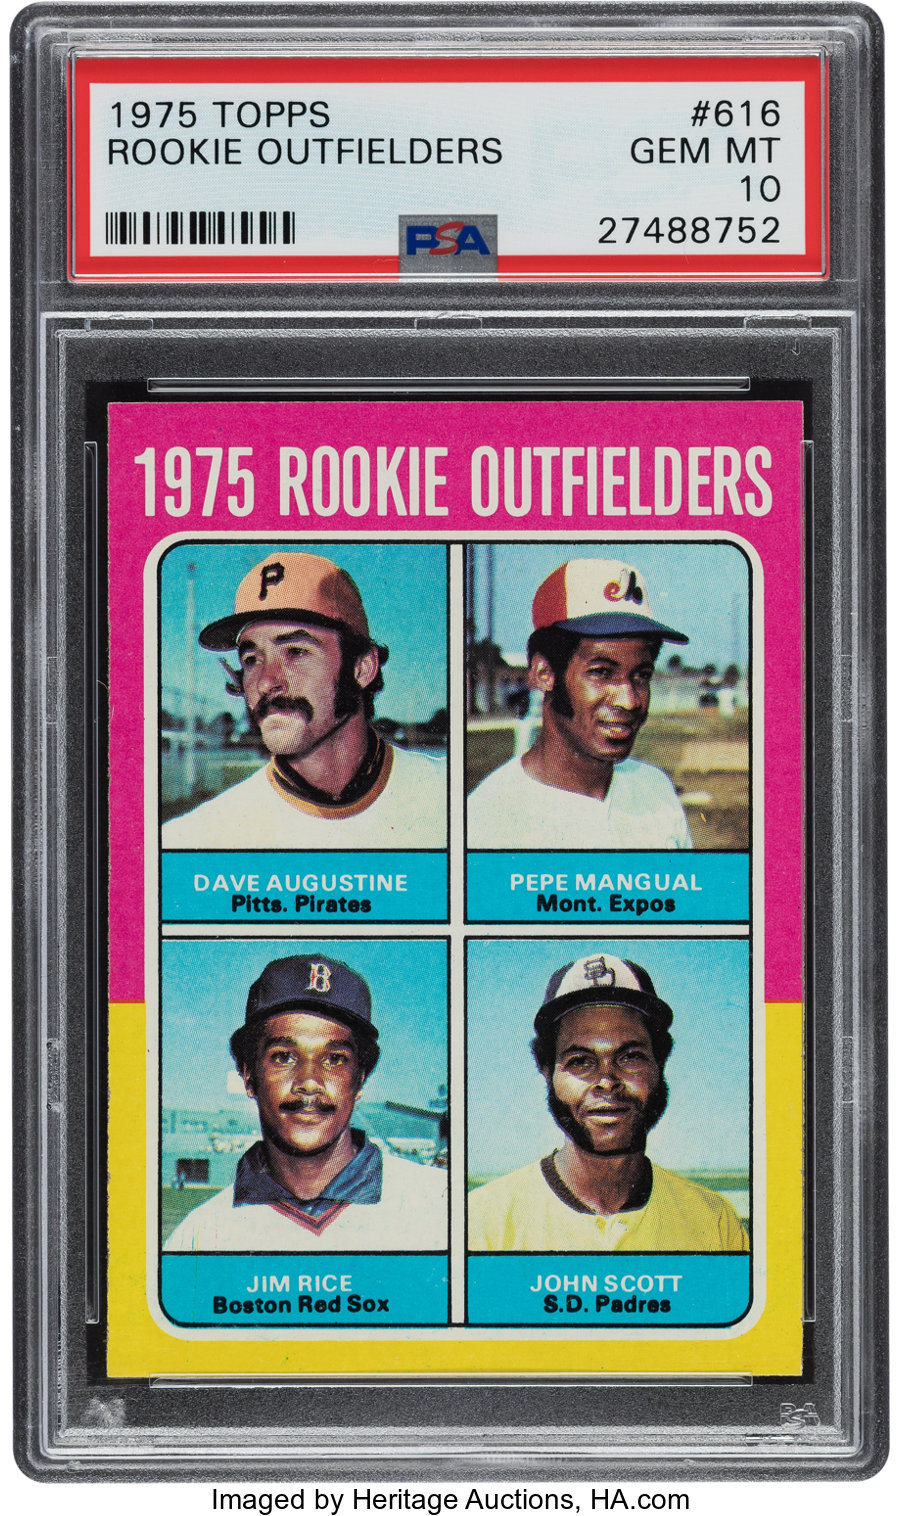 1975 Topps Rookie Outfielders Jim Rice #616 PSA Gem Mint 10 - Pop Seven